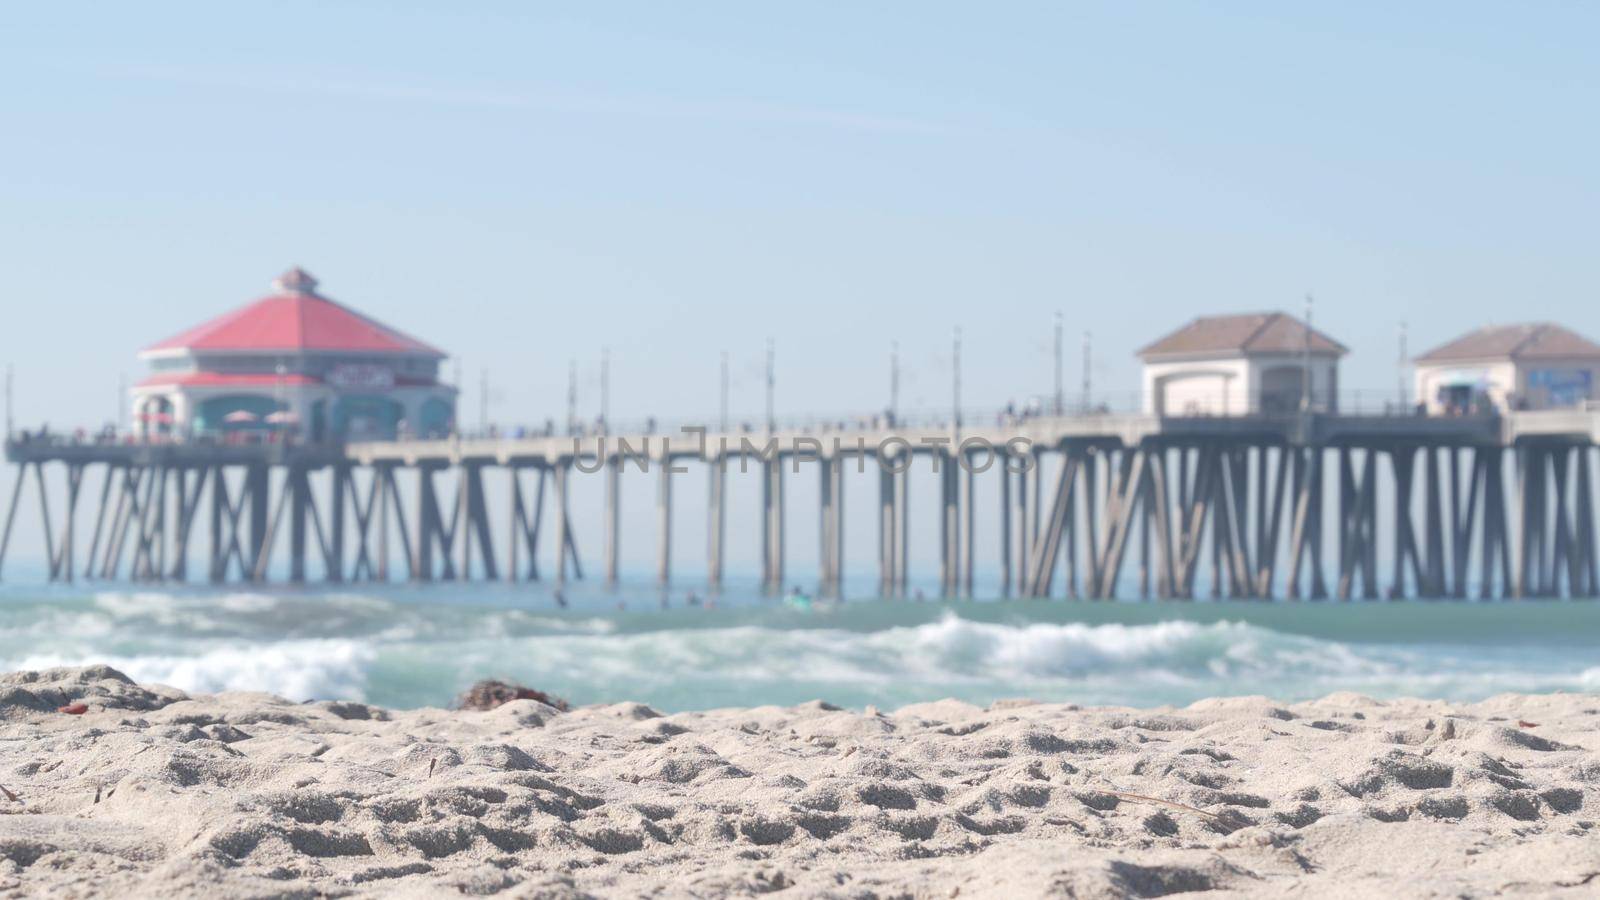 Retro huntington pier, surfing in ocean waves and beach, California coast, USA. by DogoraSun